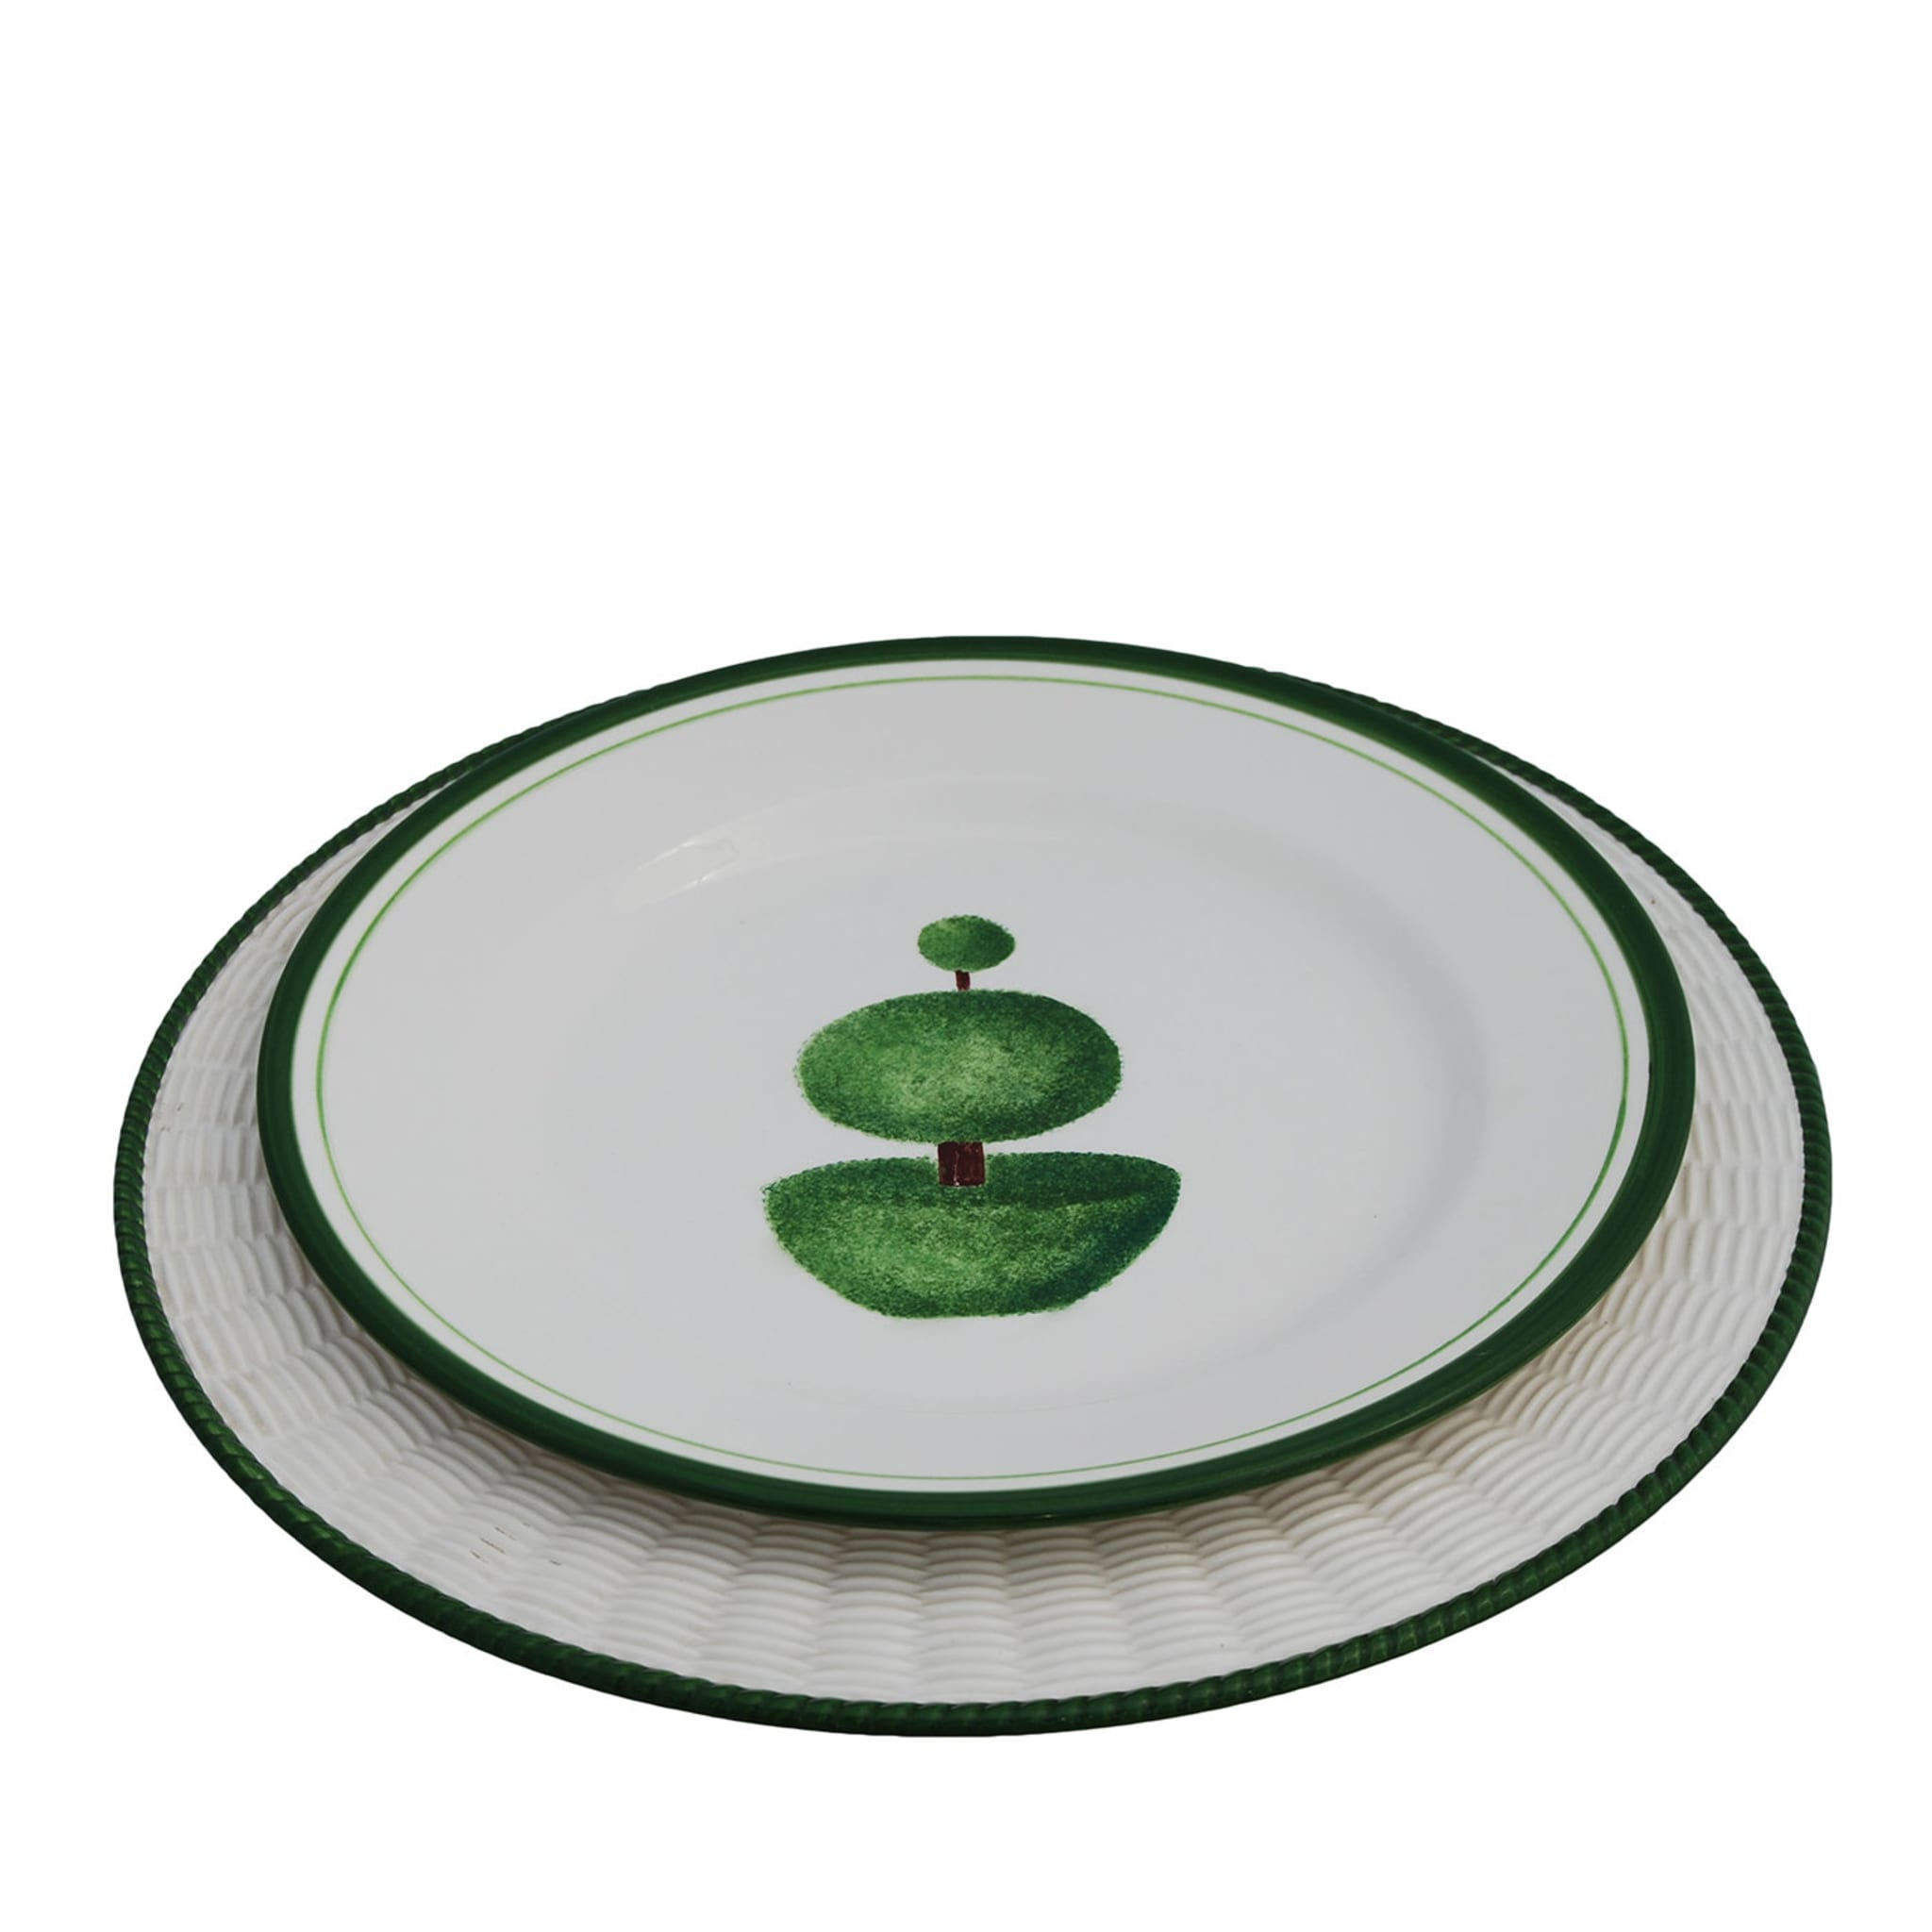 Set of 4 Green Wicker Ceramic Plates - Alternative view 2